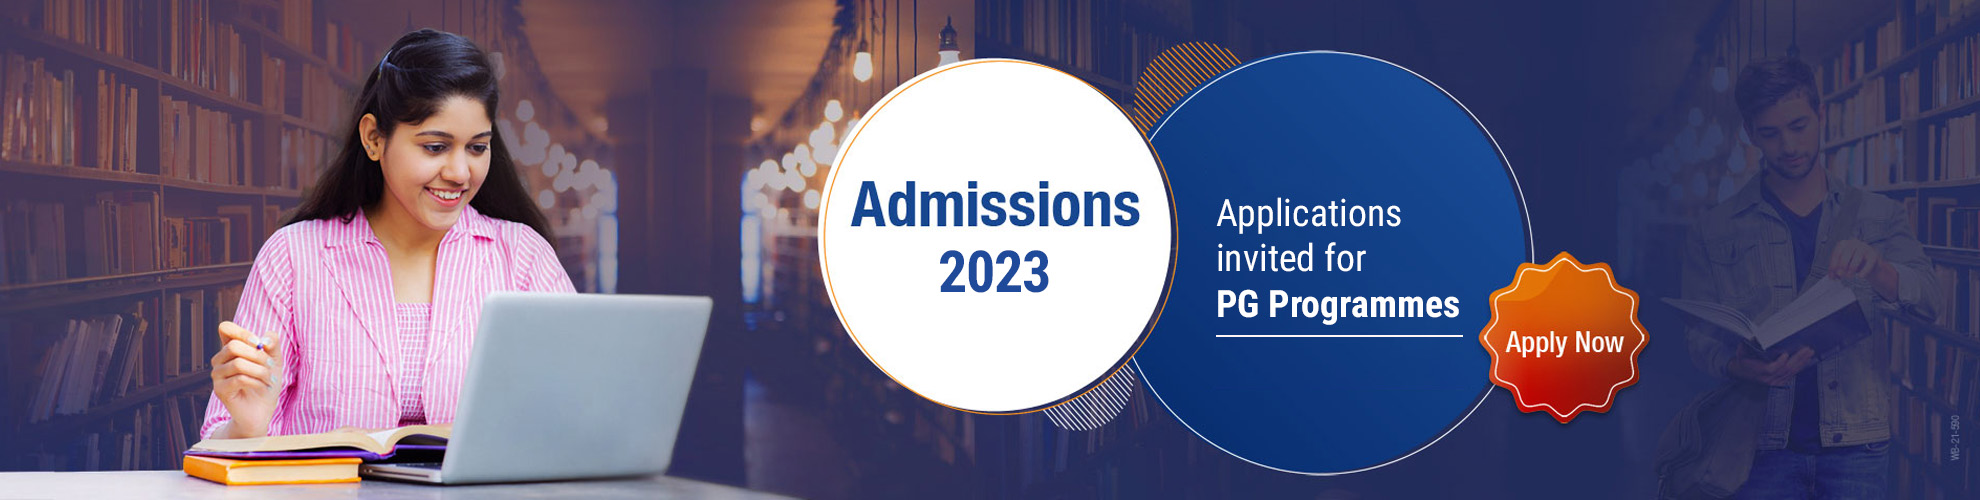 Admissions-2022 PG Programs